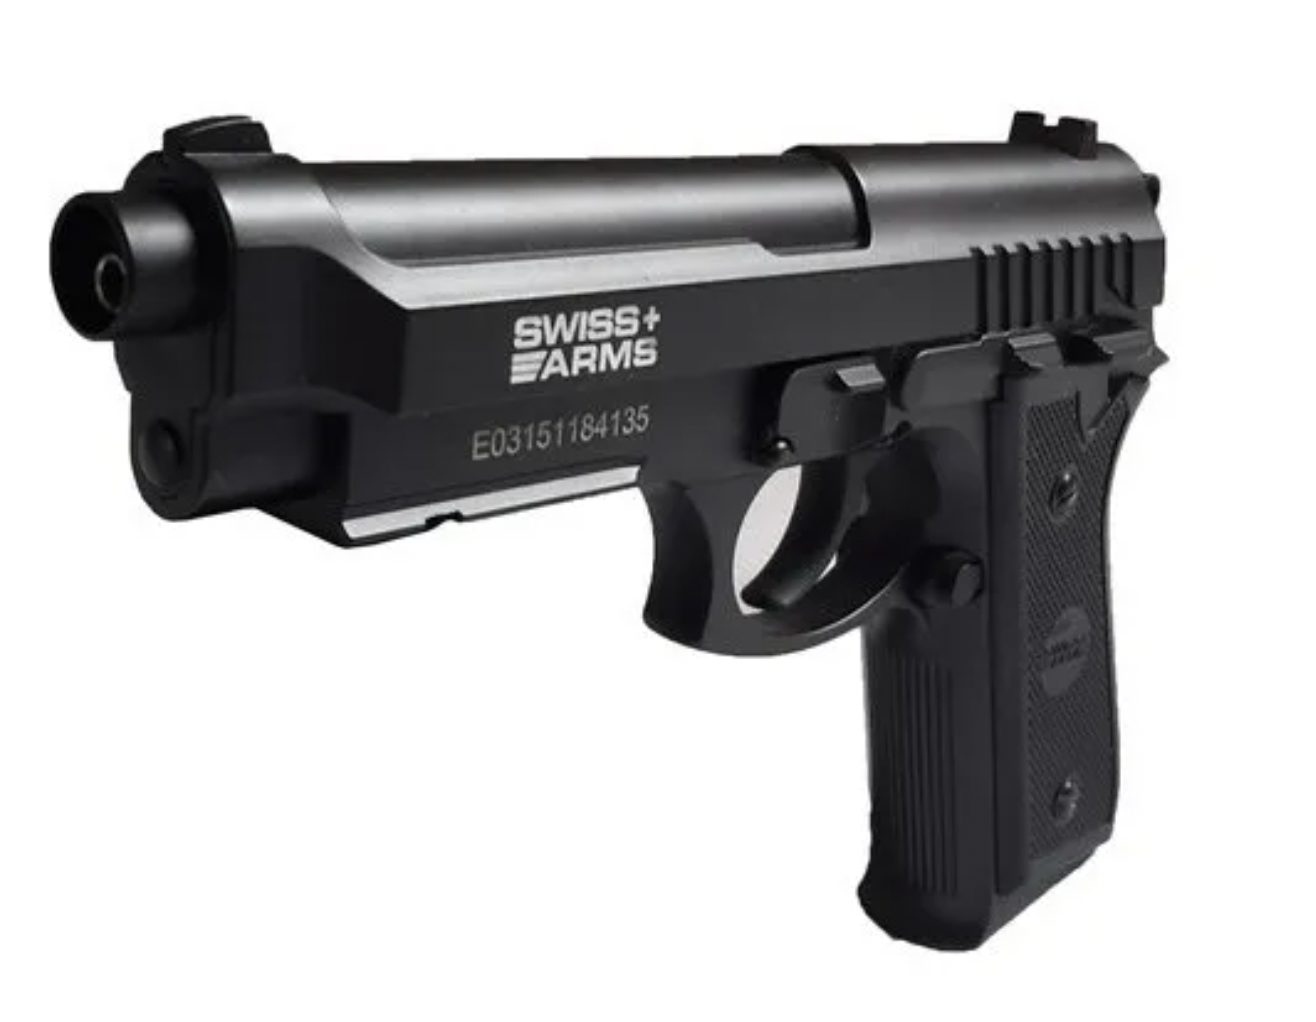 Pistola Balines Co2 Swiss Arms Blowback P92 Full Metal - Reborn